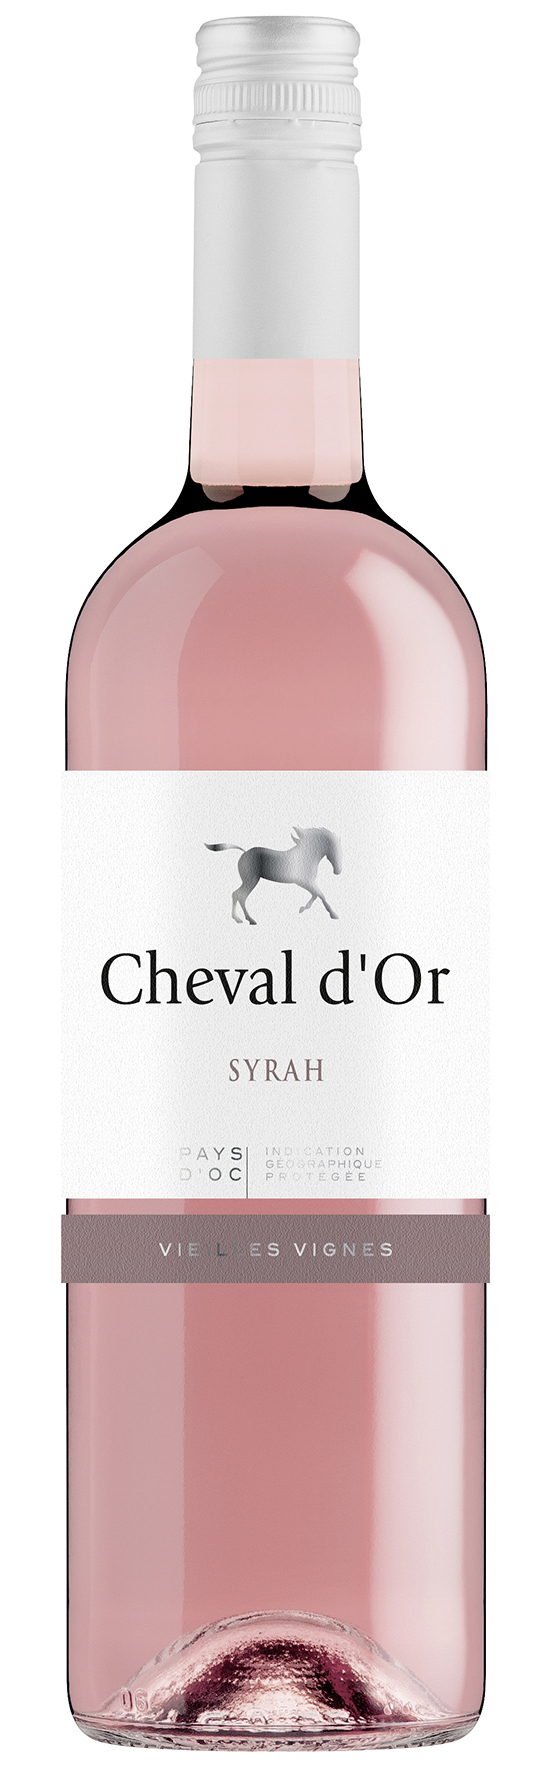 Le Cheval d\'Oc Syrah Rose jetzt günstig bestellen. | Bonbou Gaumenfreuden